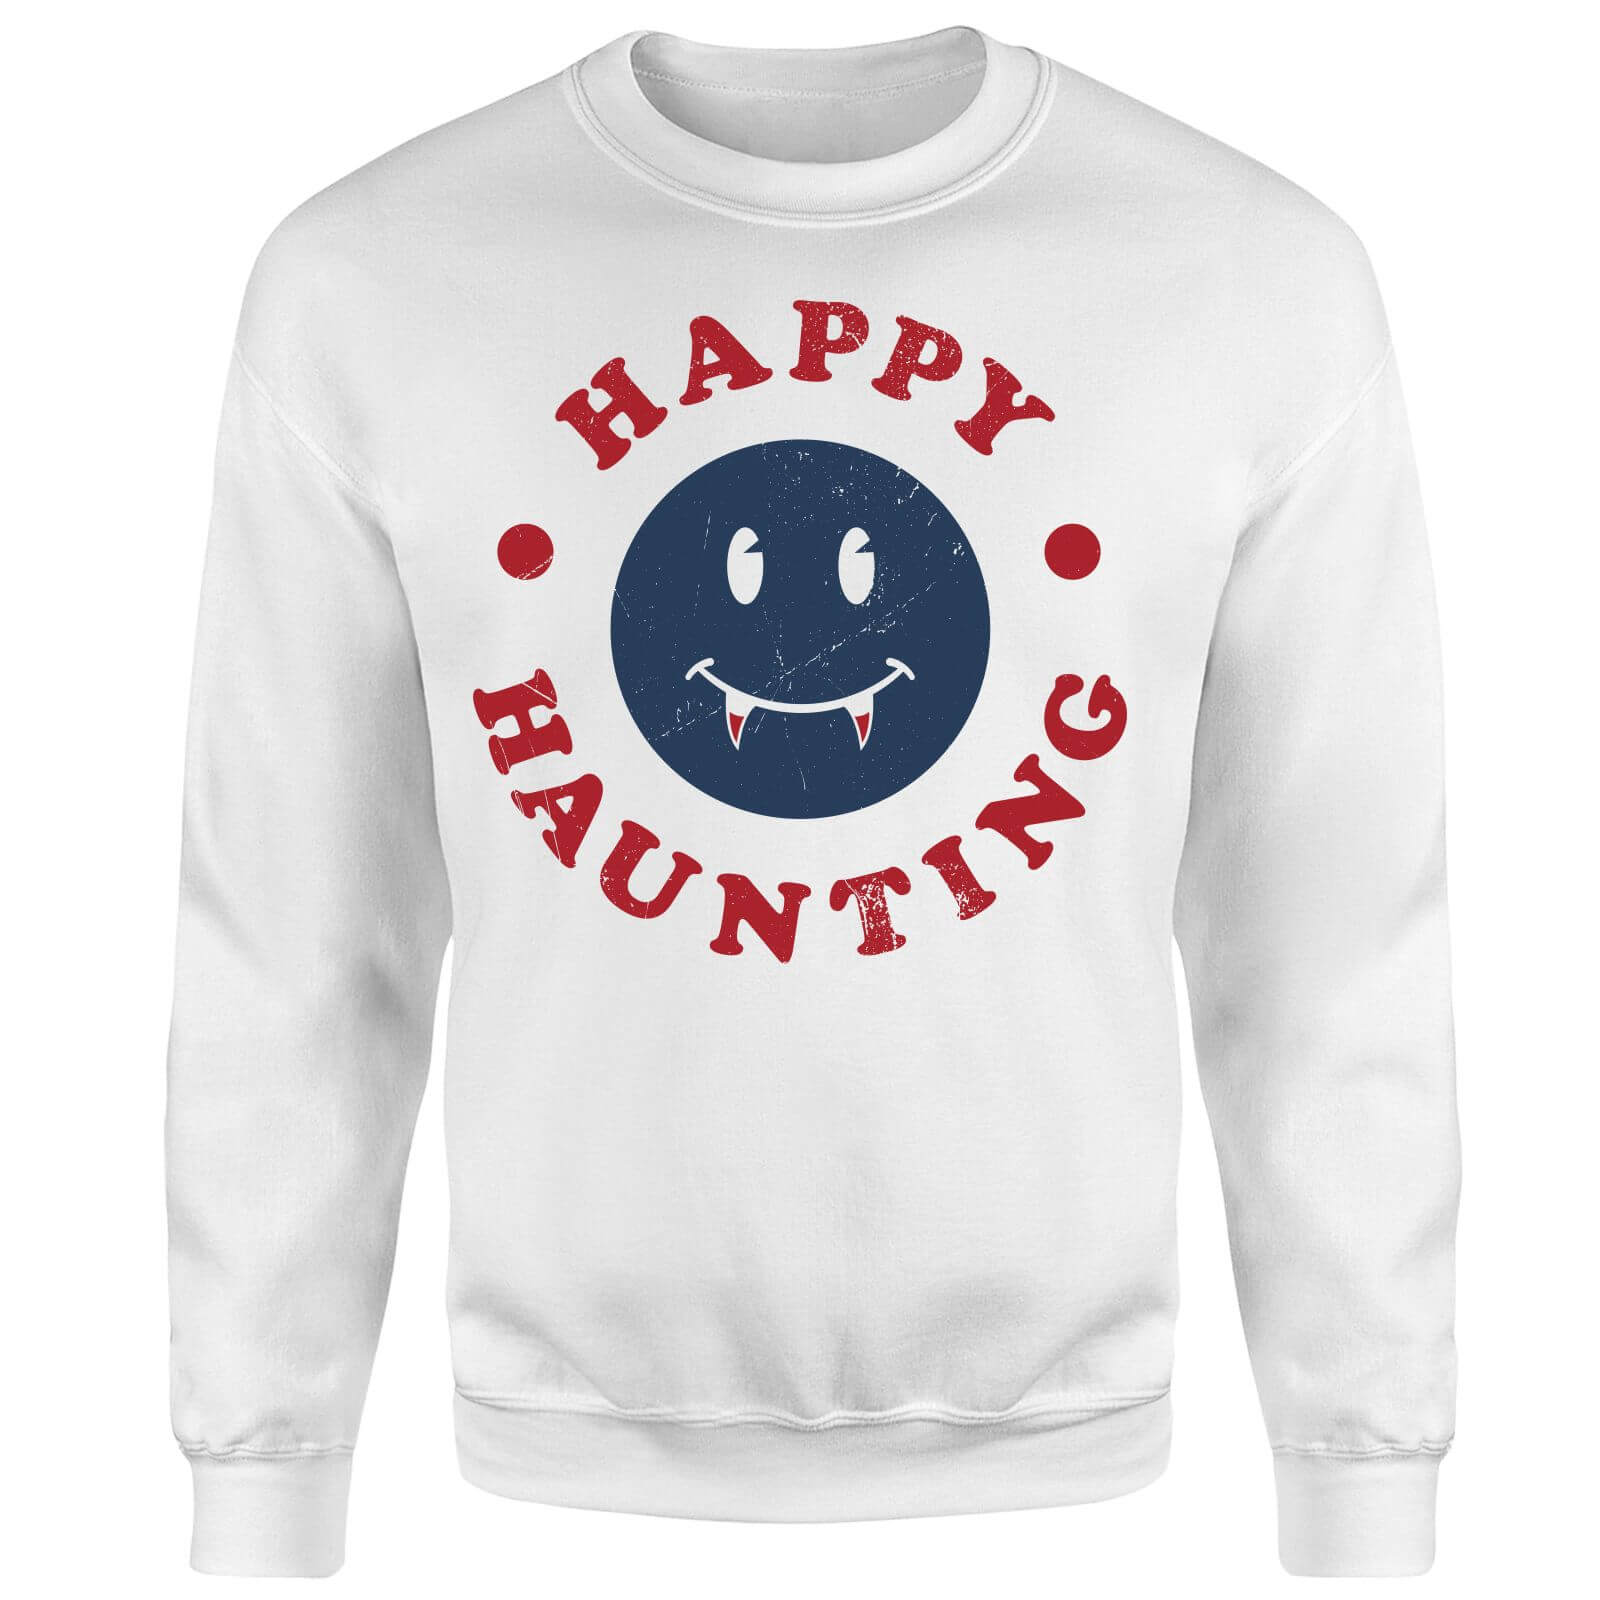 Happy Haunting Fang Sweatshirt - White - XL - White